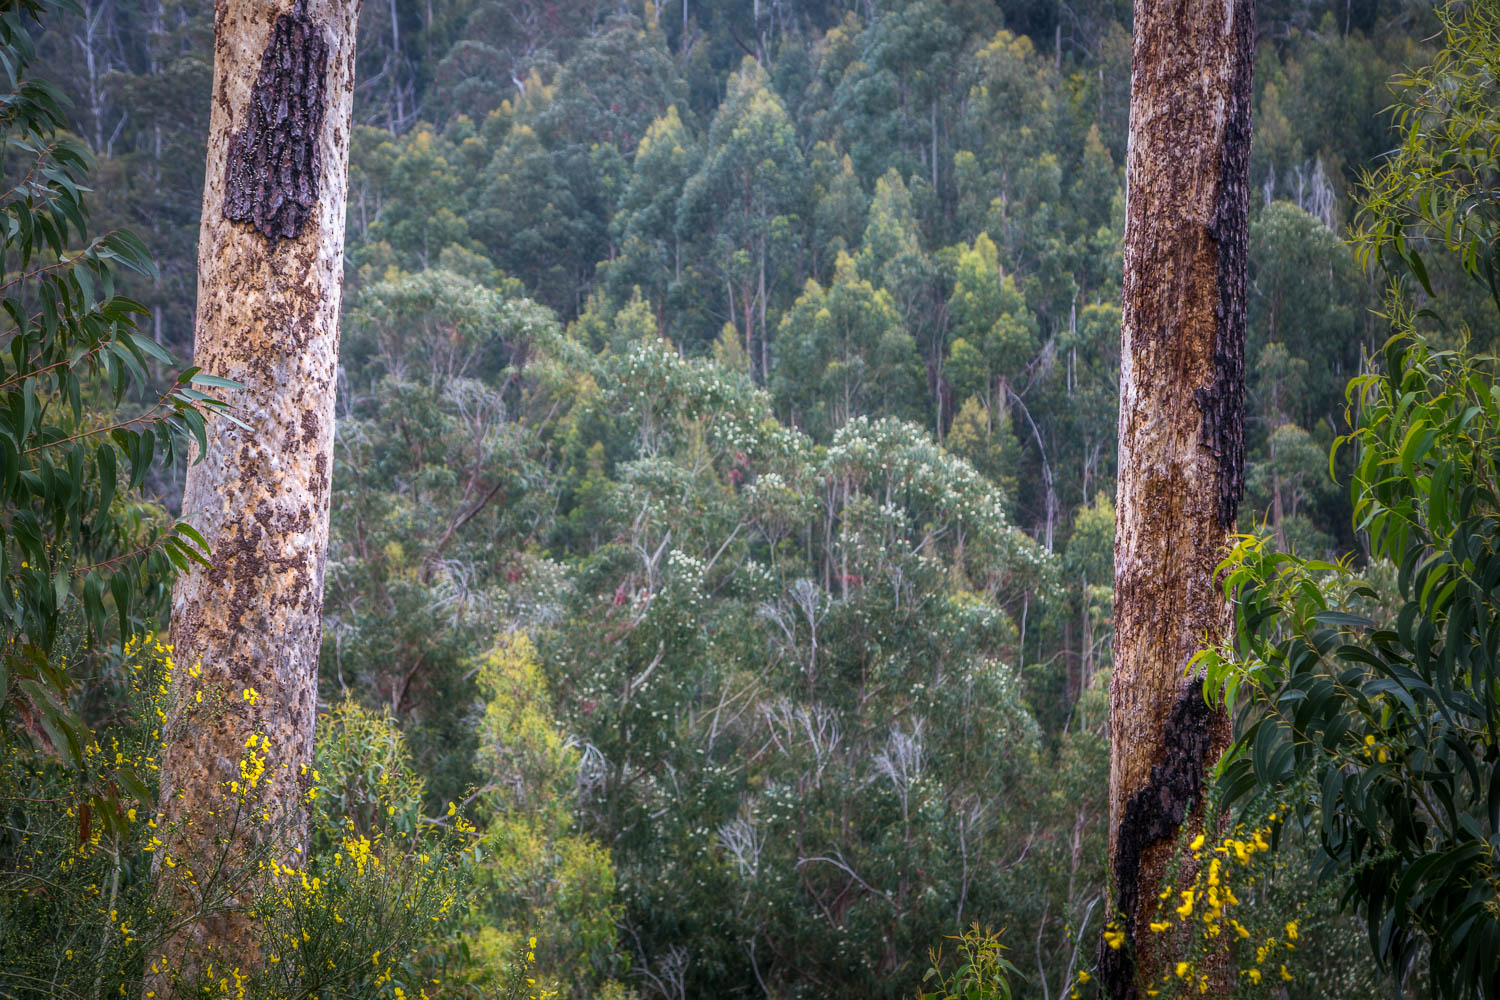 Laurel, eucalyptus trees